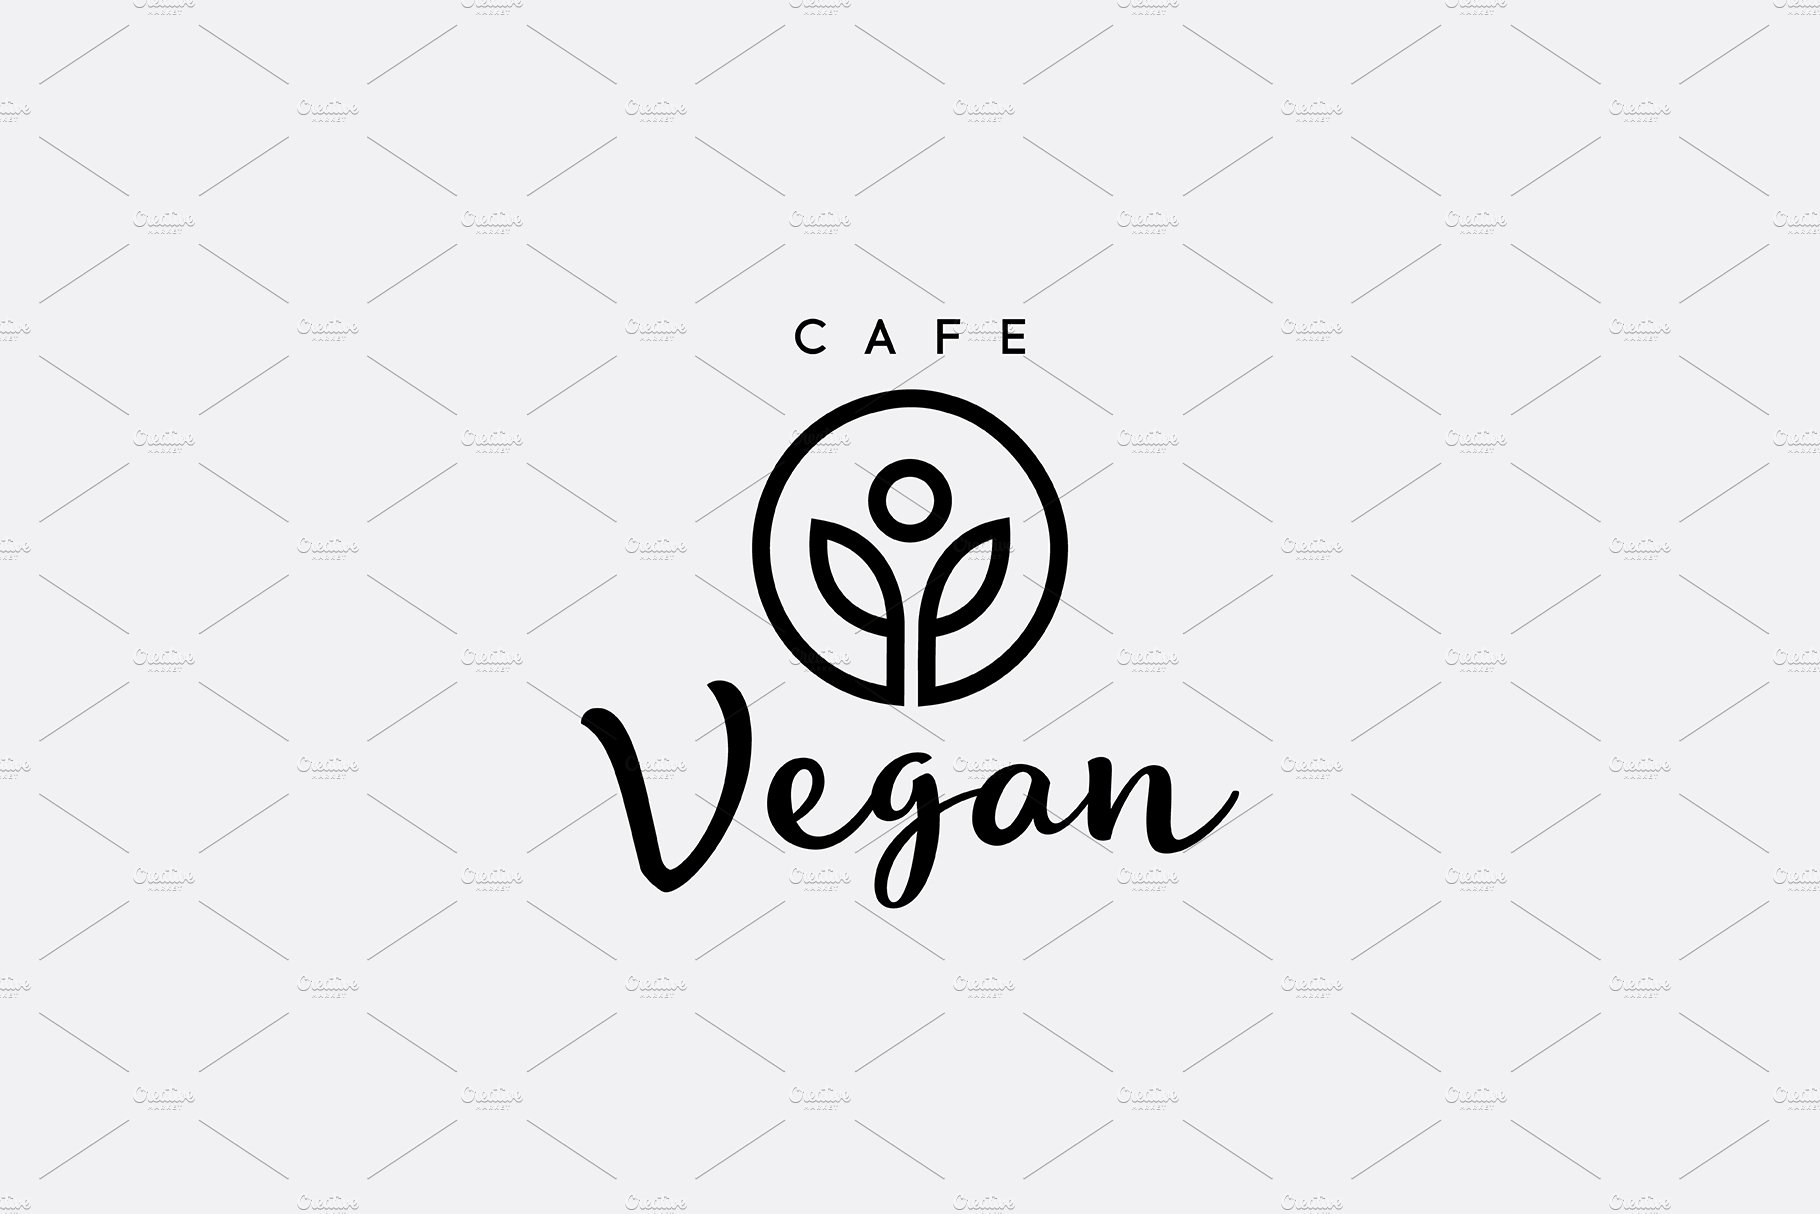 Vegetarian Healthy Food Cafe Logo cover image.